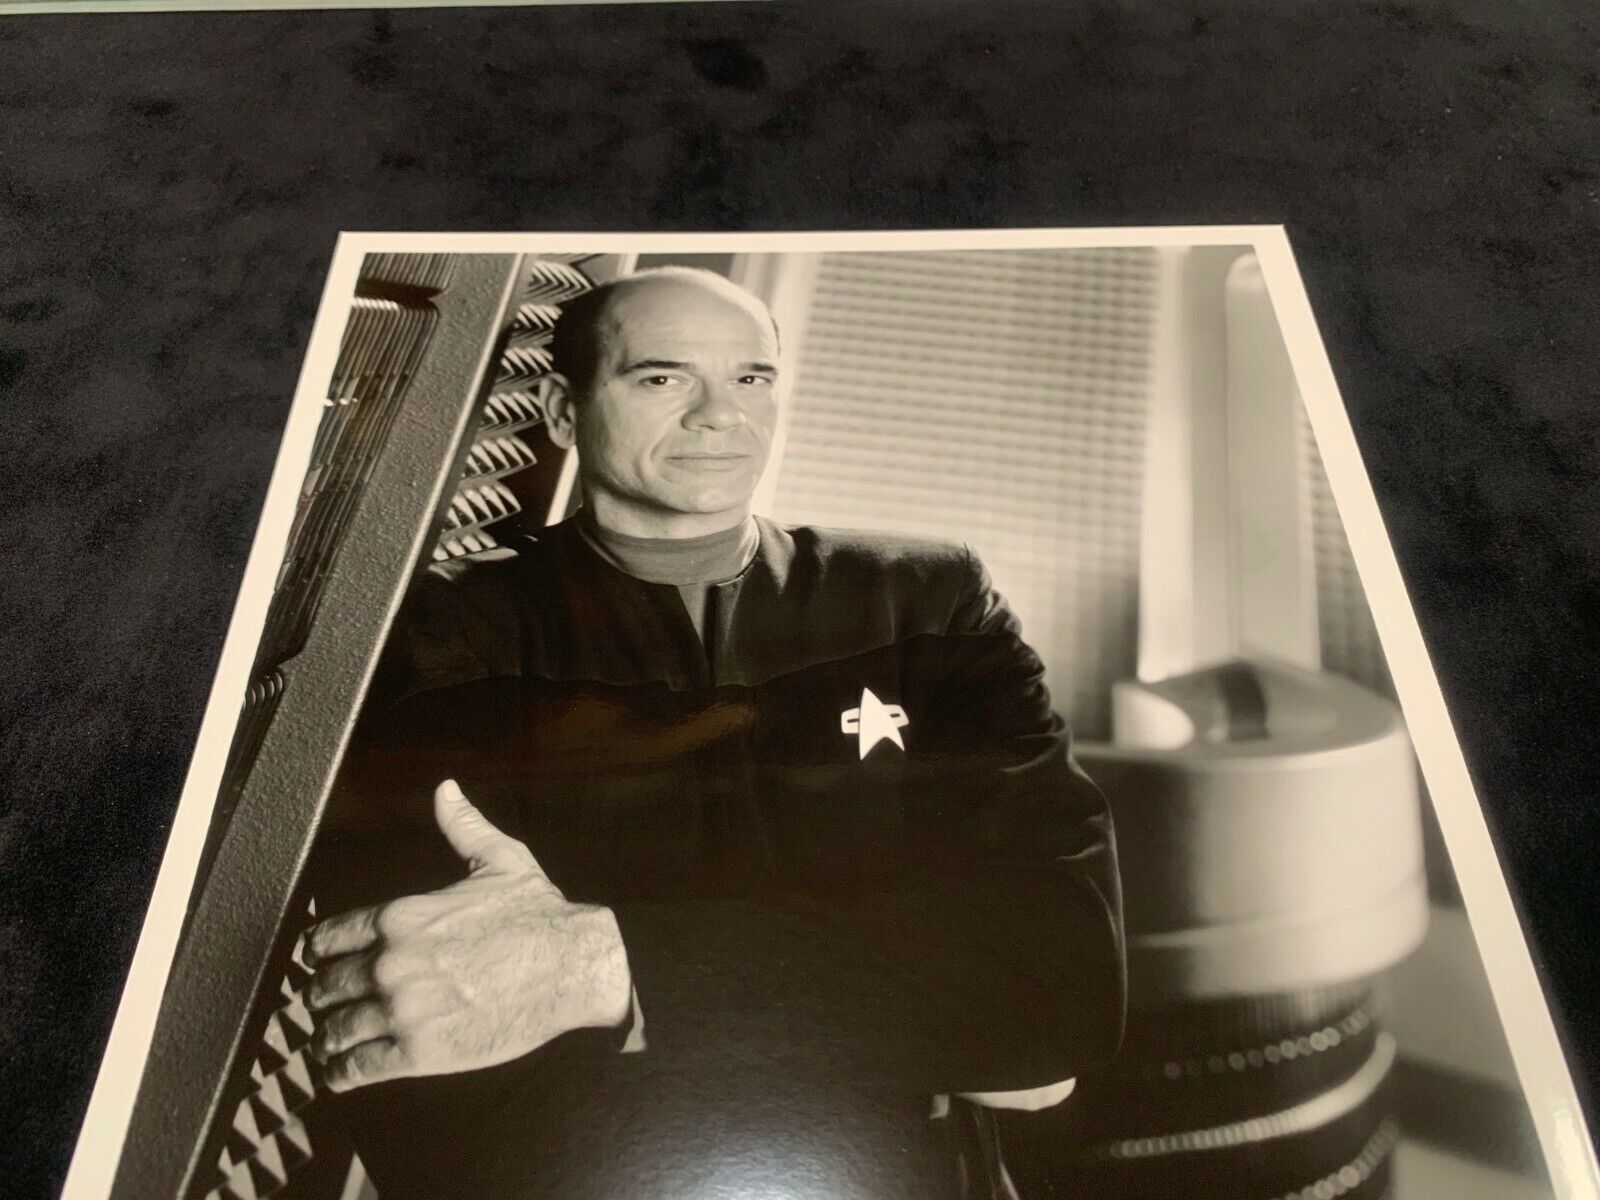 Star Trek Voyager 8x10 B&W Photo of Robert Picardo in Excellent Condition